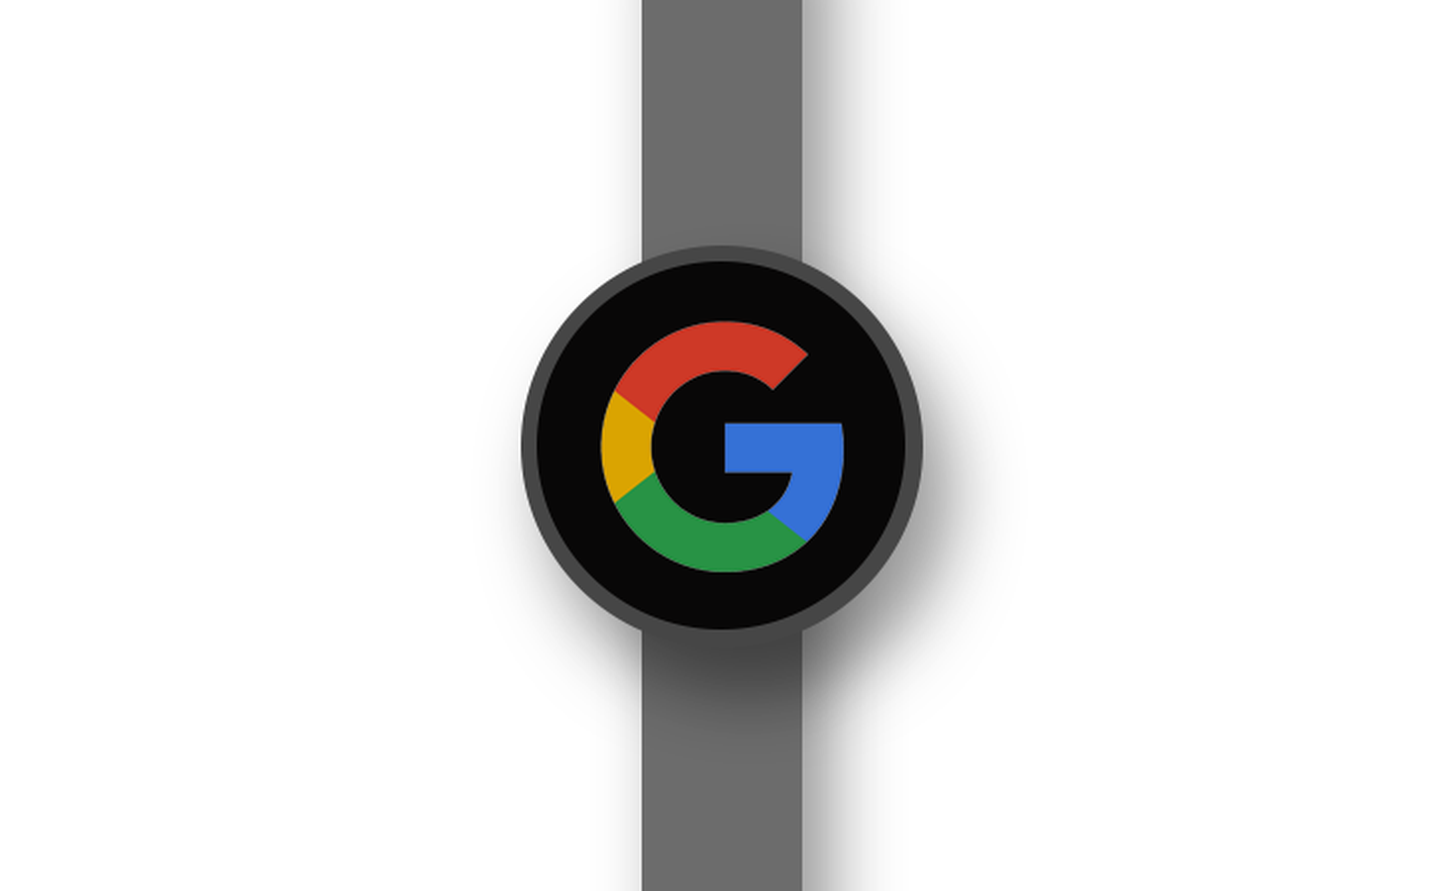 Логотип Google. Иллюстративное фото.